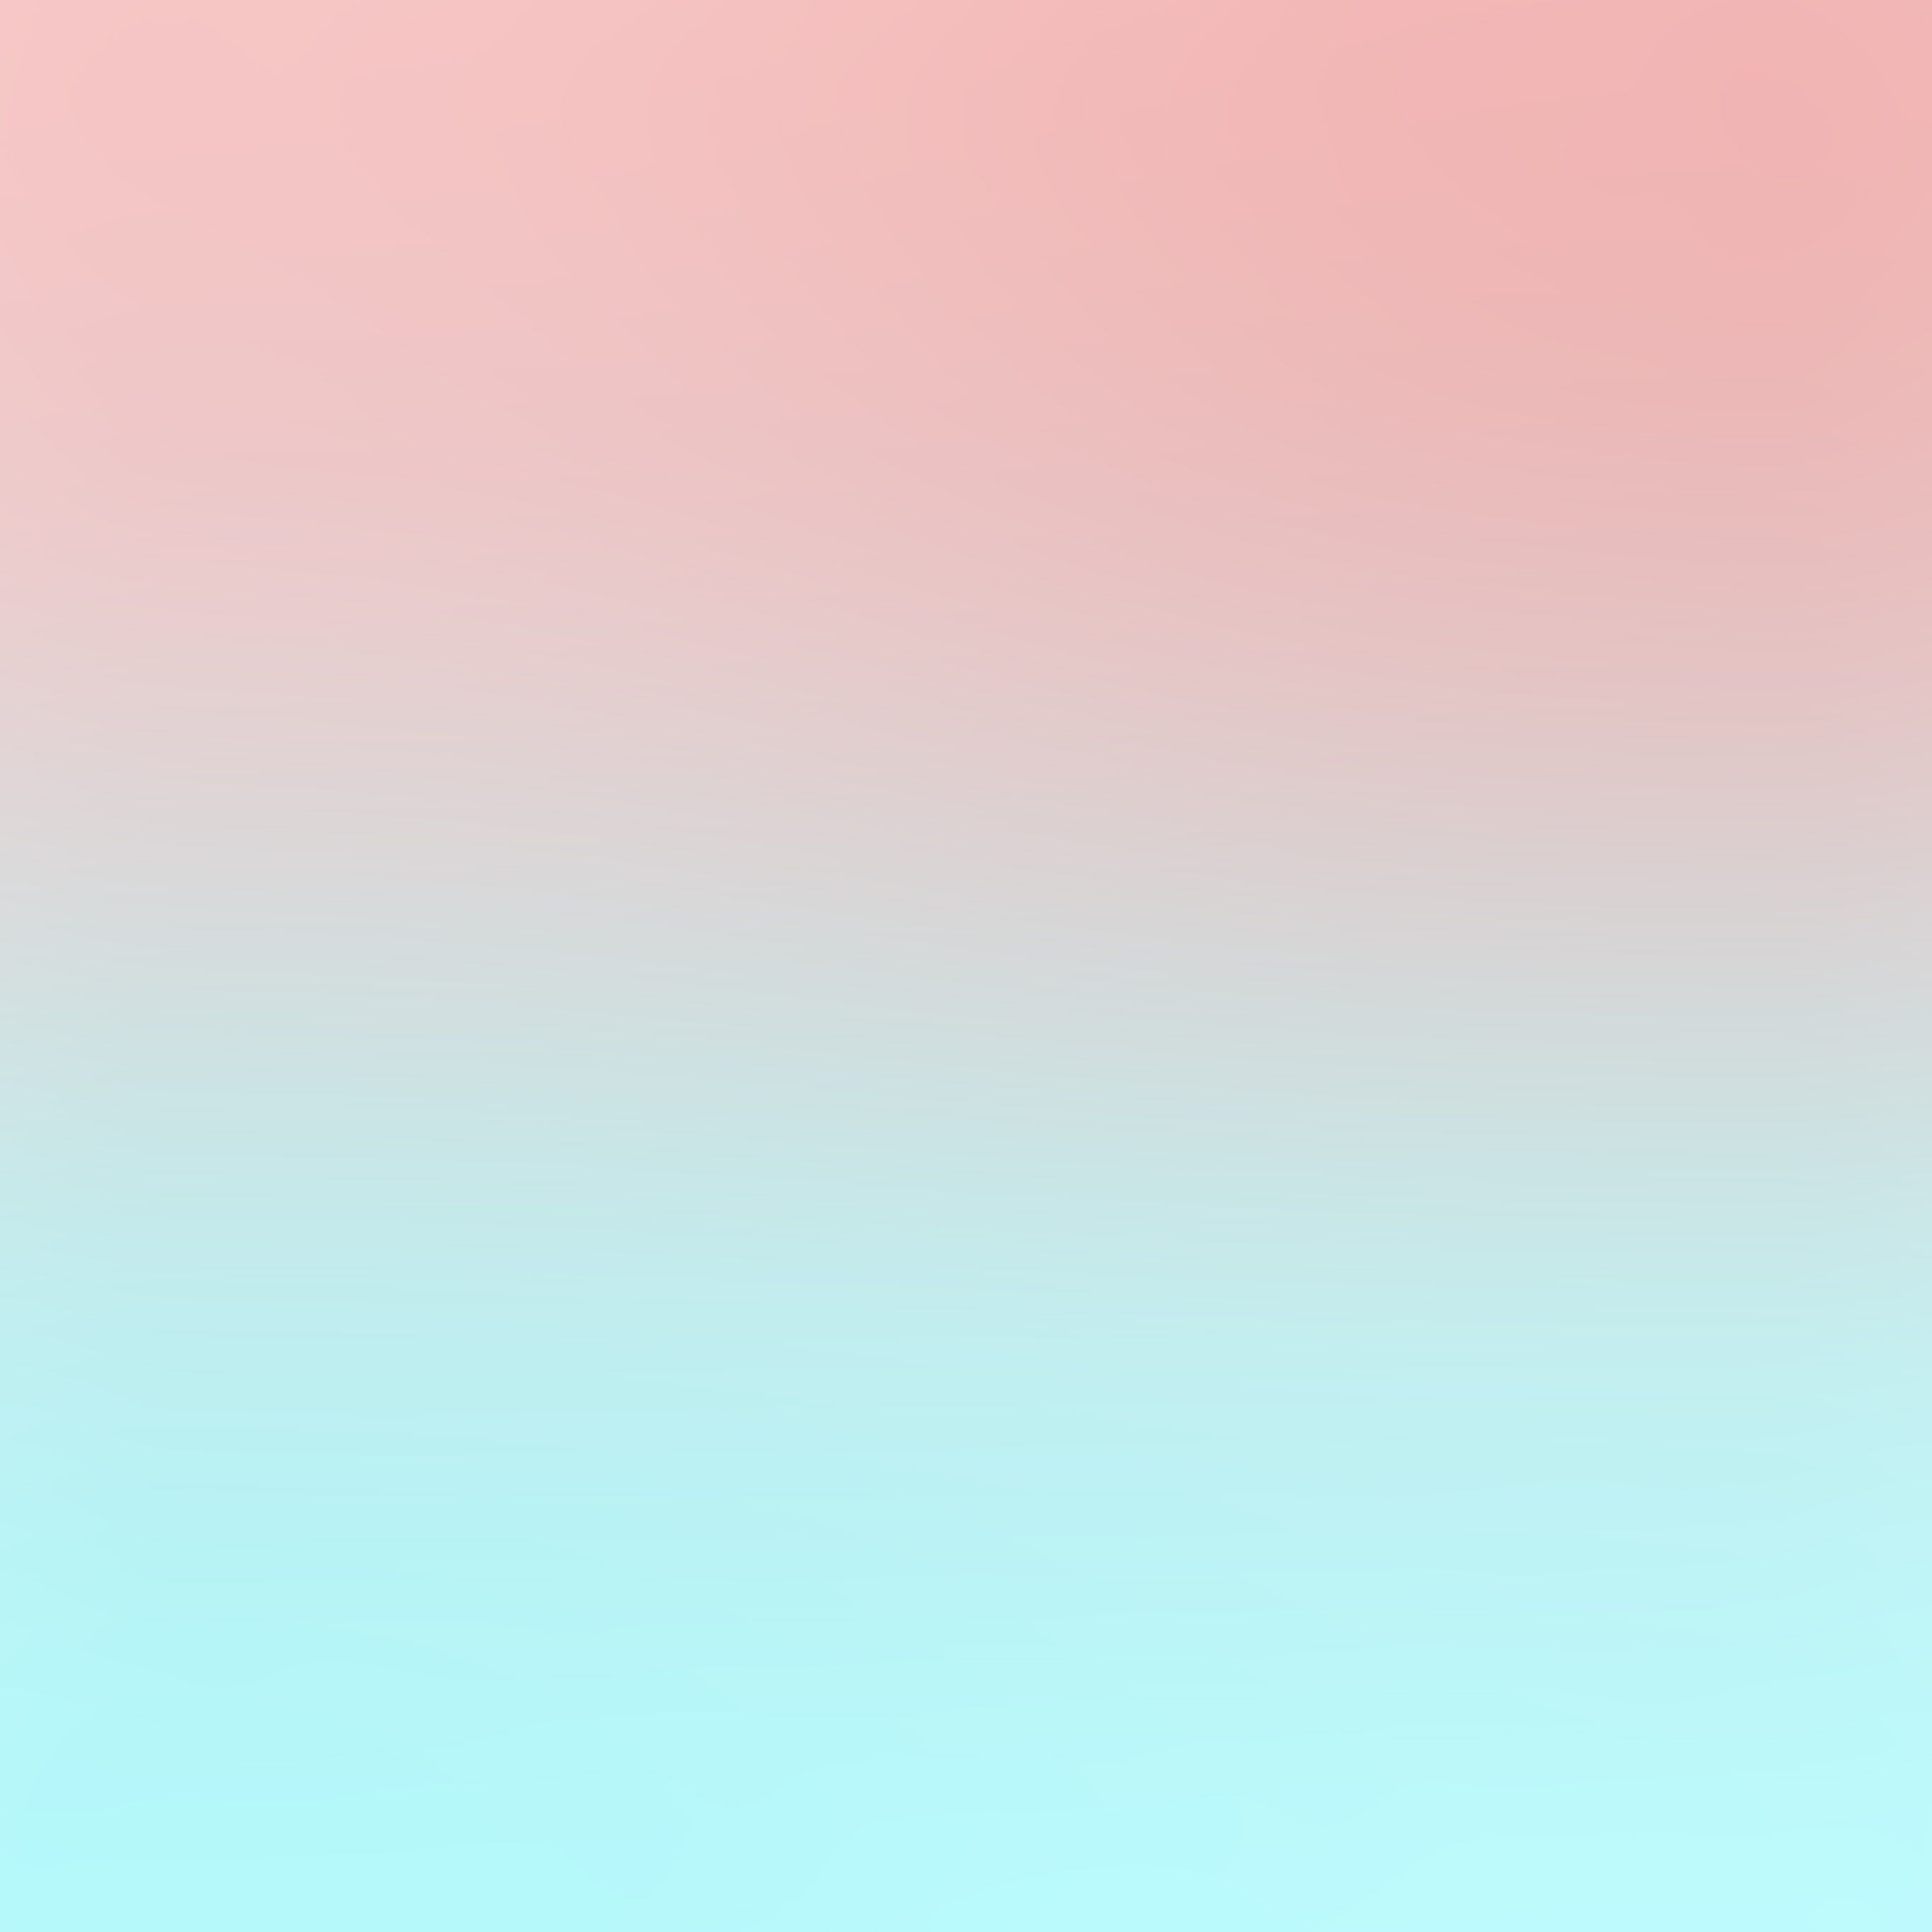 Red Blue Soft Pastel Blur Gradation Wallpaper